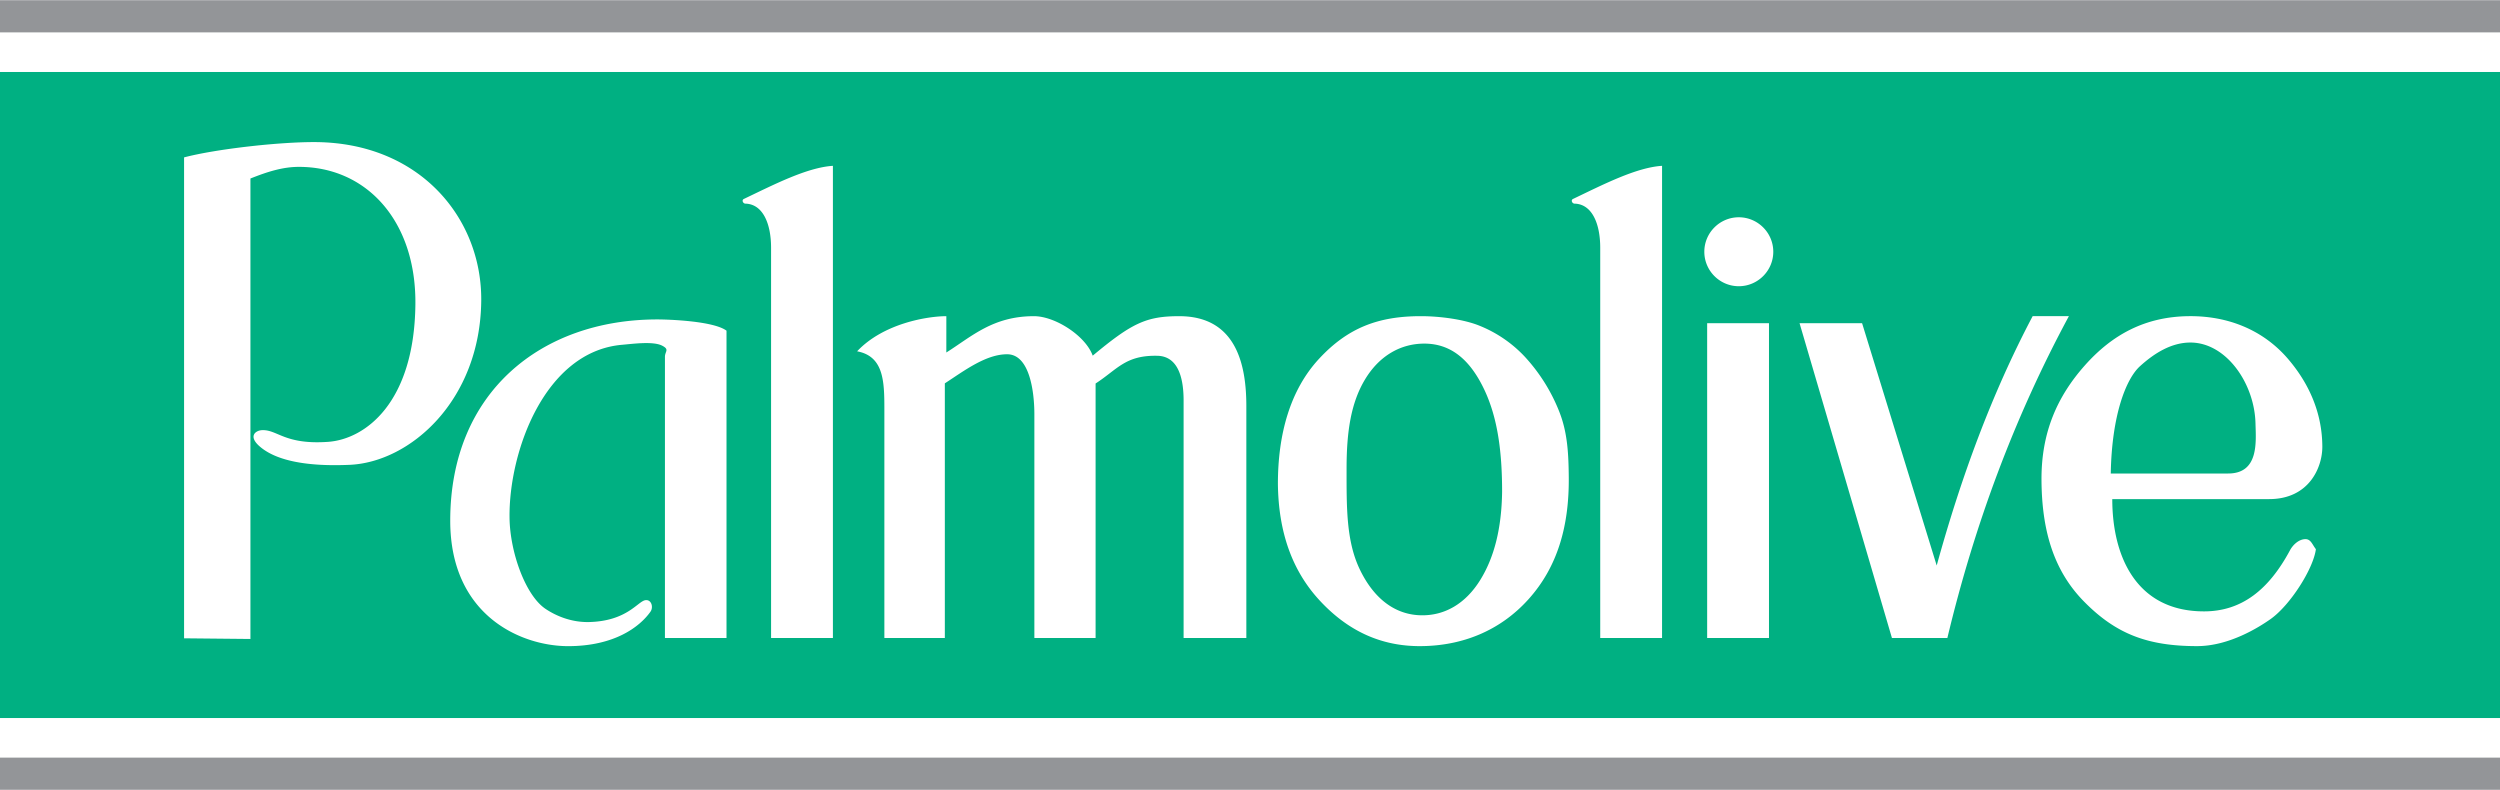 Palmolive logo colors